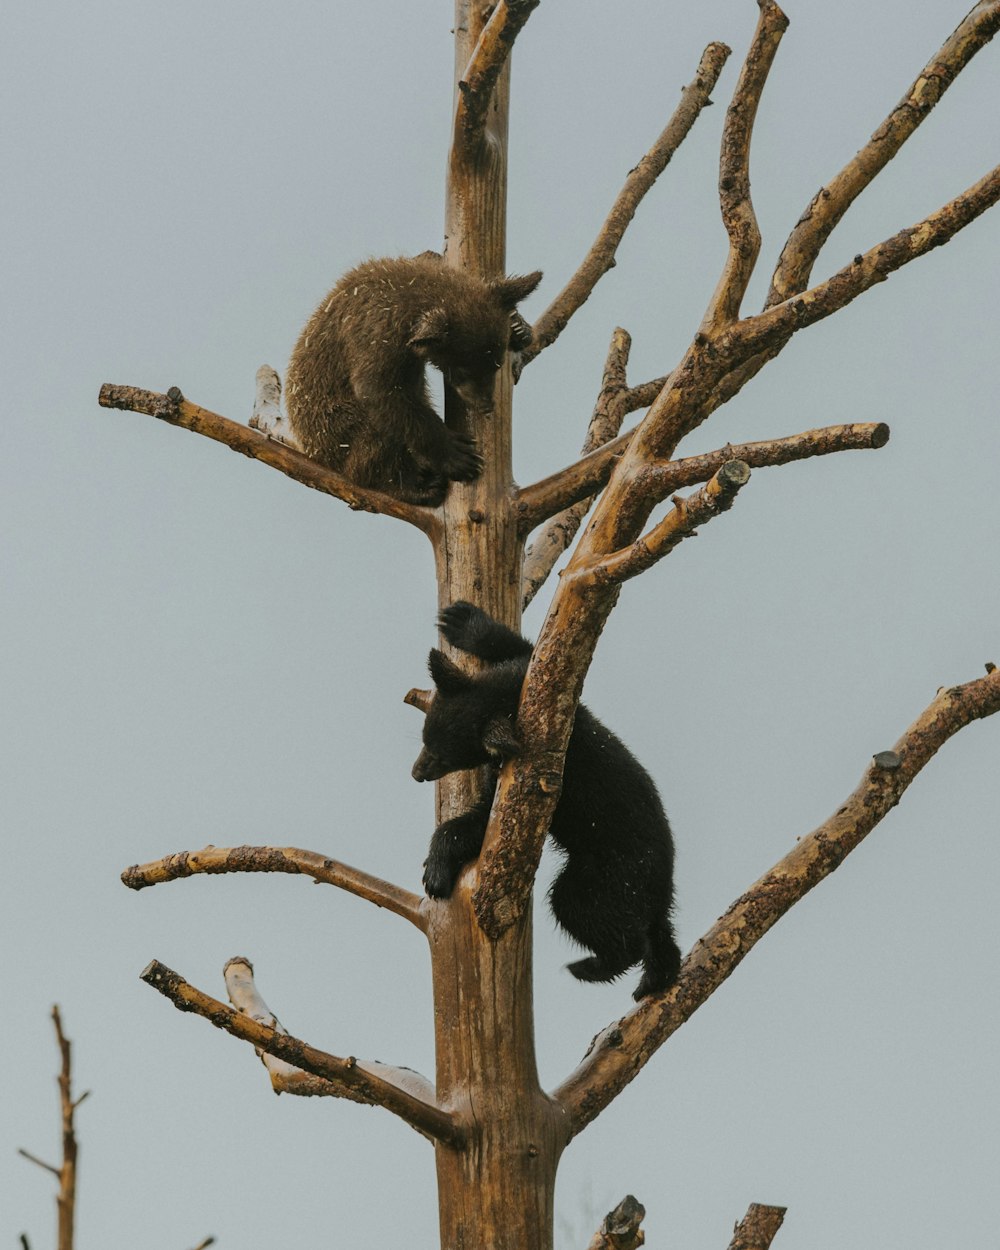 a group of bears climbing up a tree